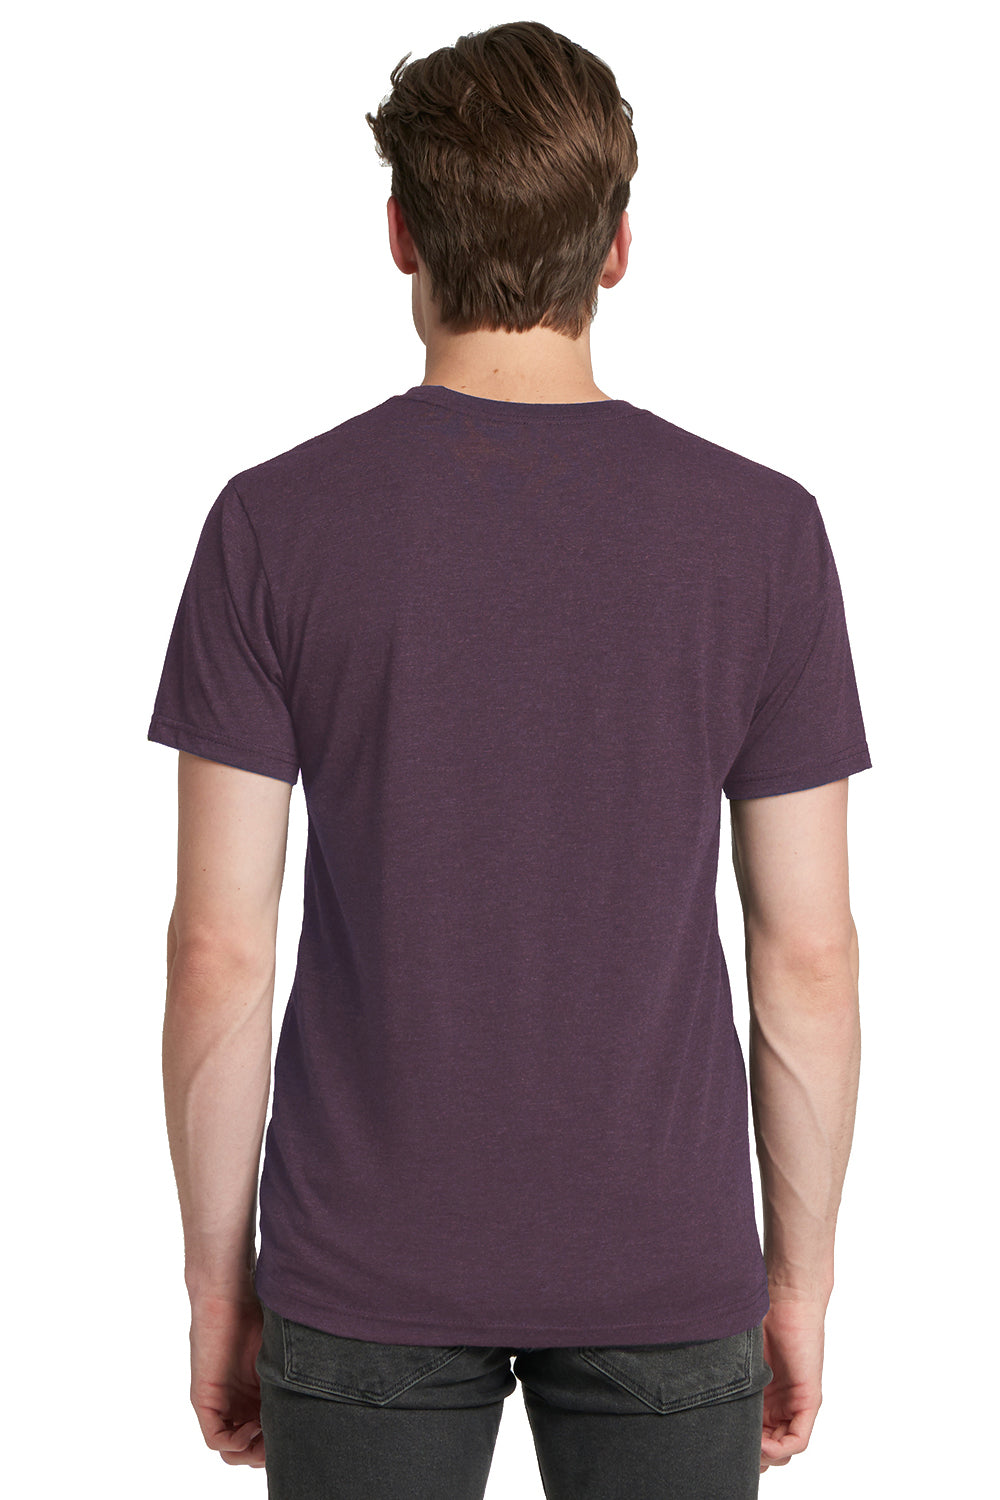 Next Level 6010 Mens Jersey Short Sleeve Crewneck T-Shirt Purple Back